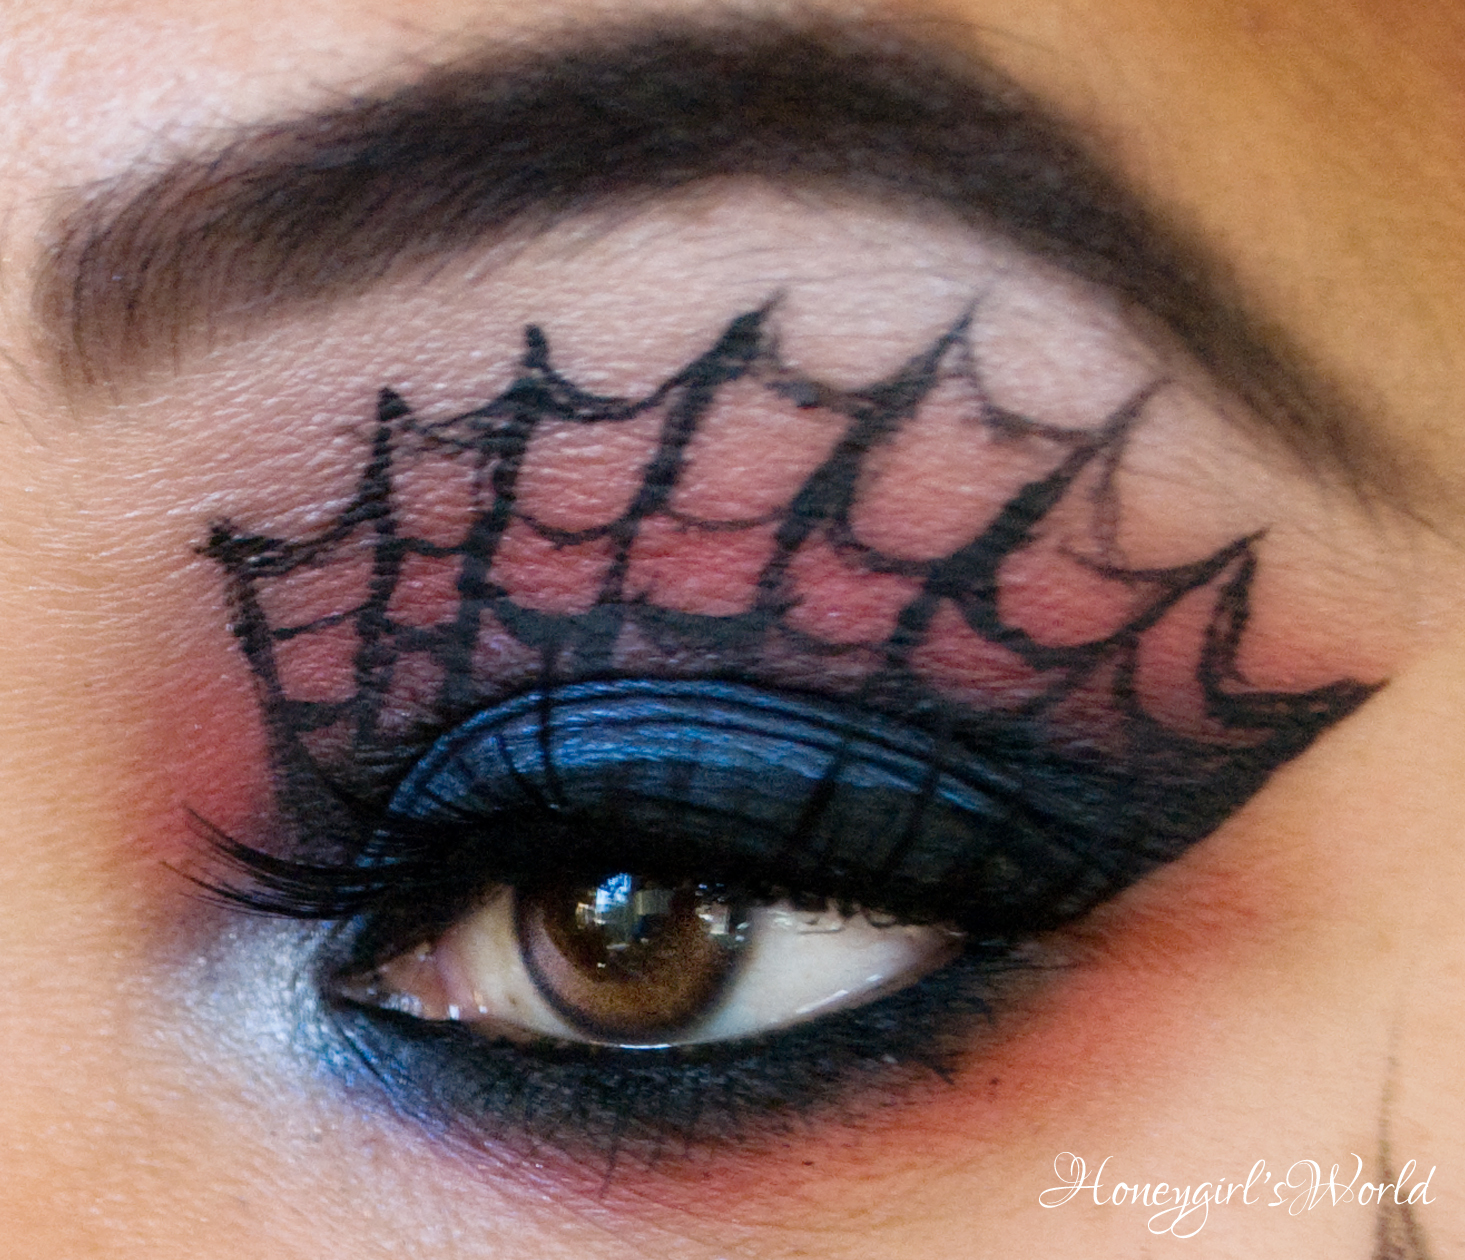 The Amazing Spiderman makeup